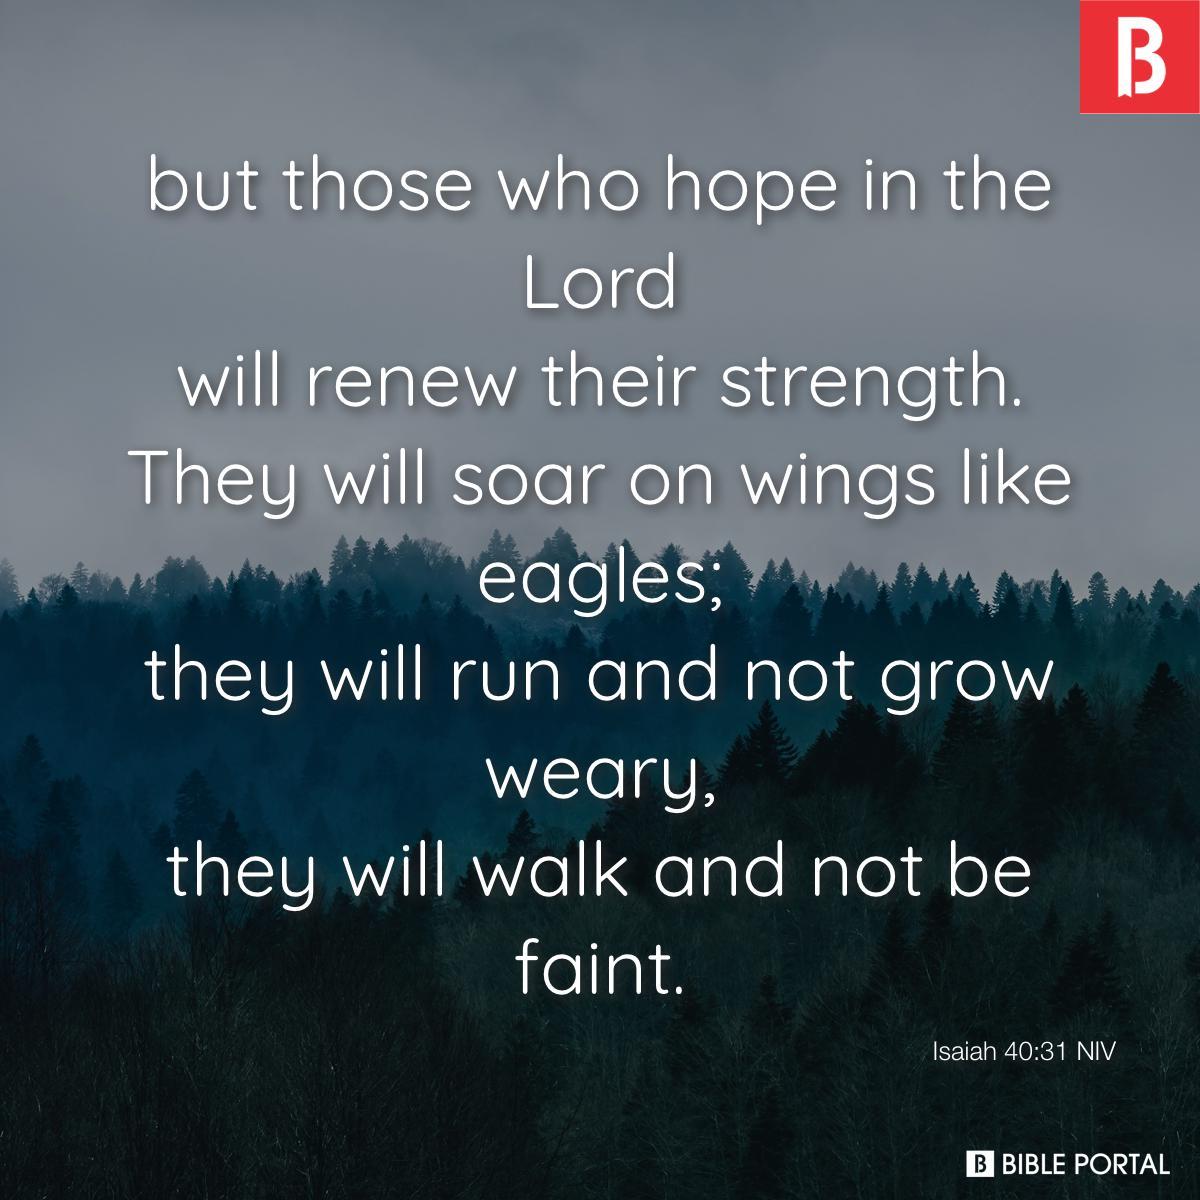 Isaiah 40:31